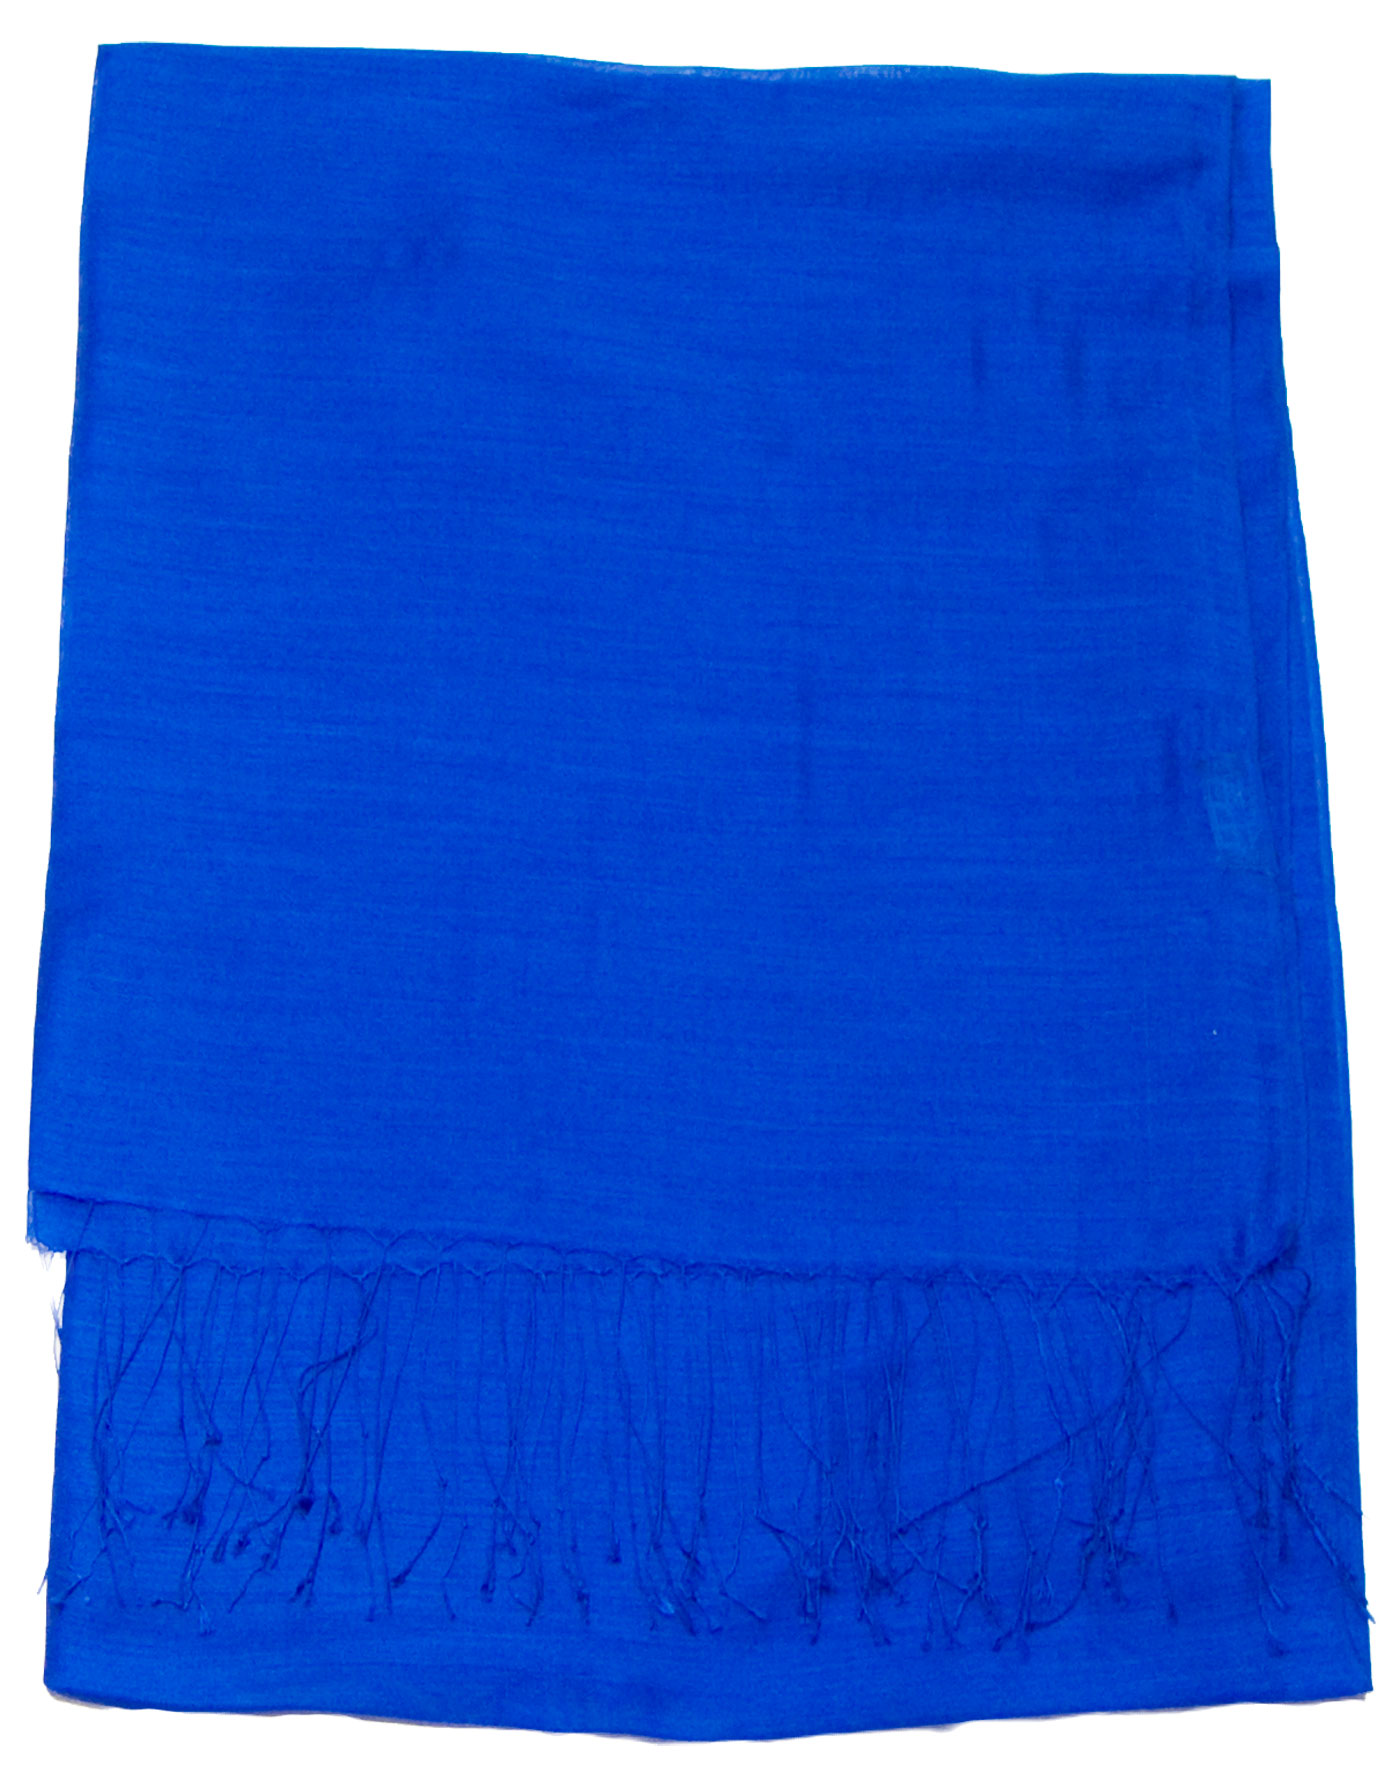 étole foulard bleu vif soie fine Alex 4